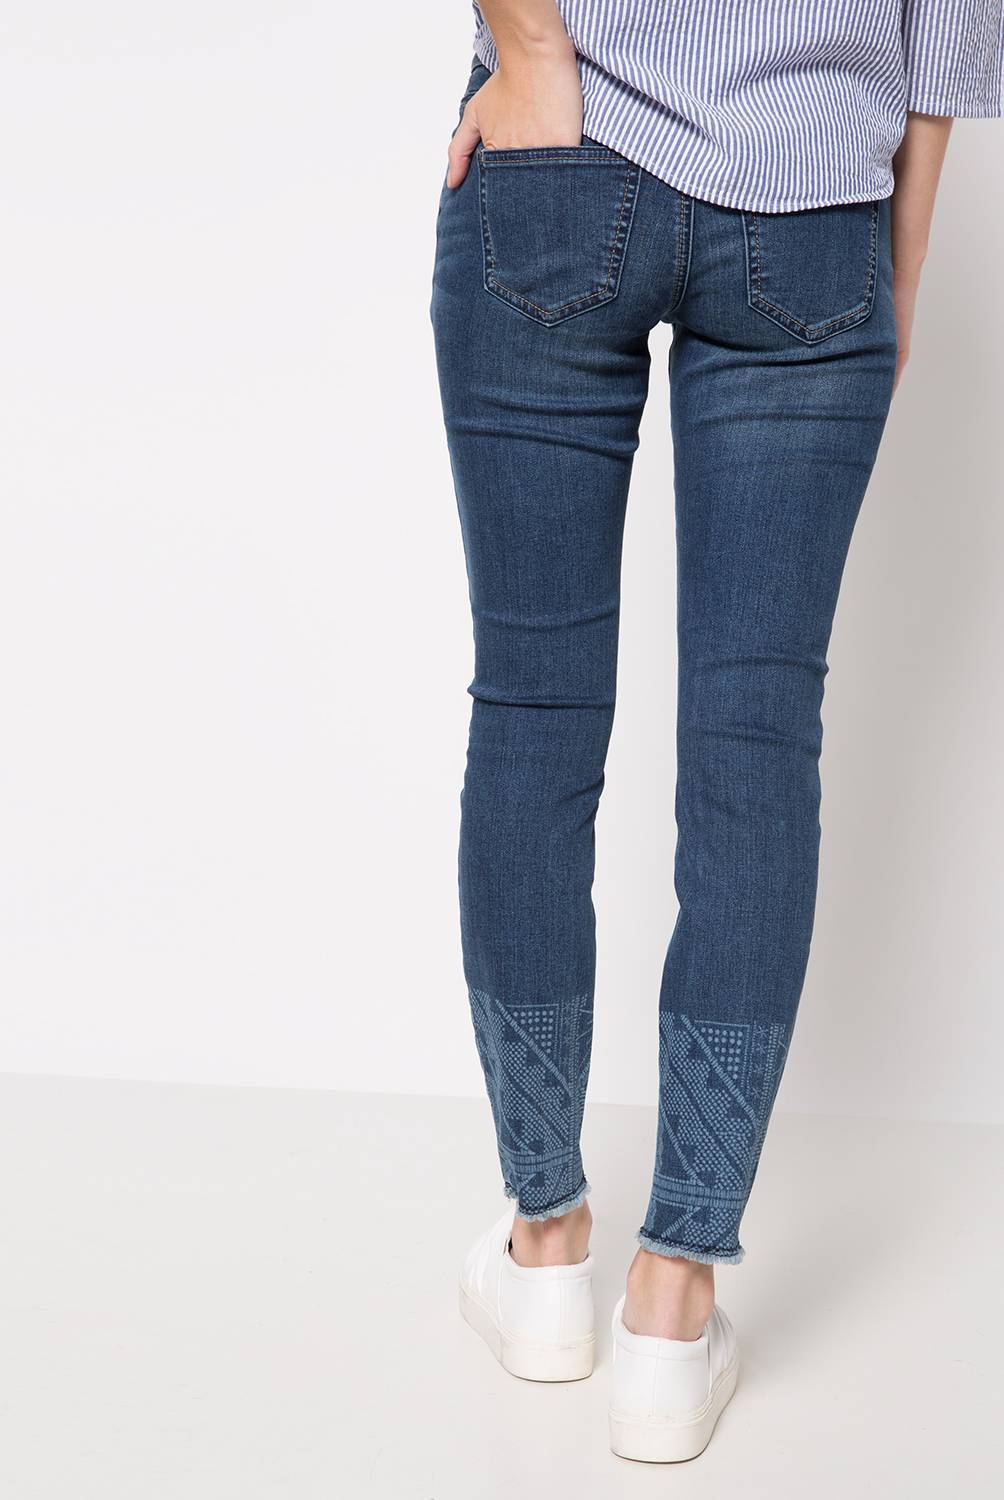 Vero Moda - Jeans Skinny Estampados